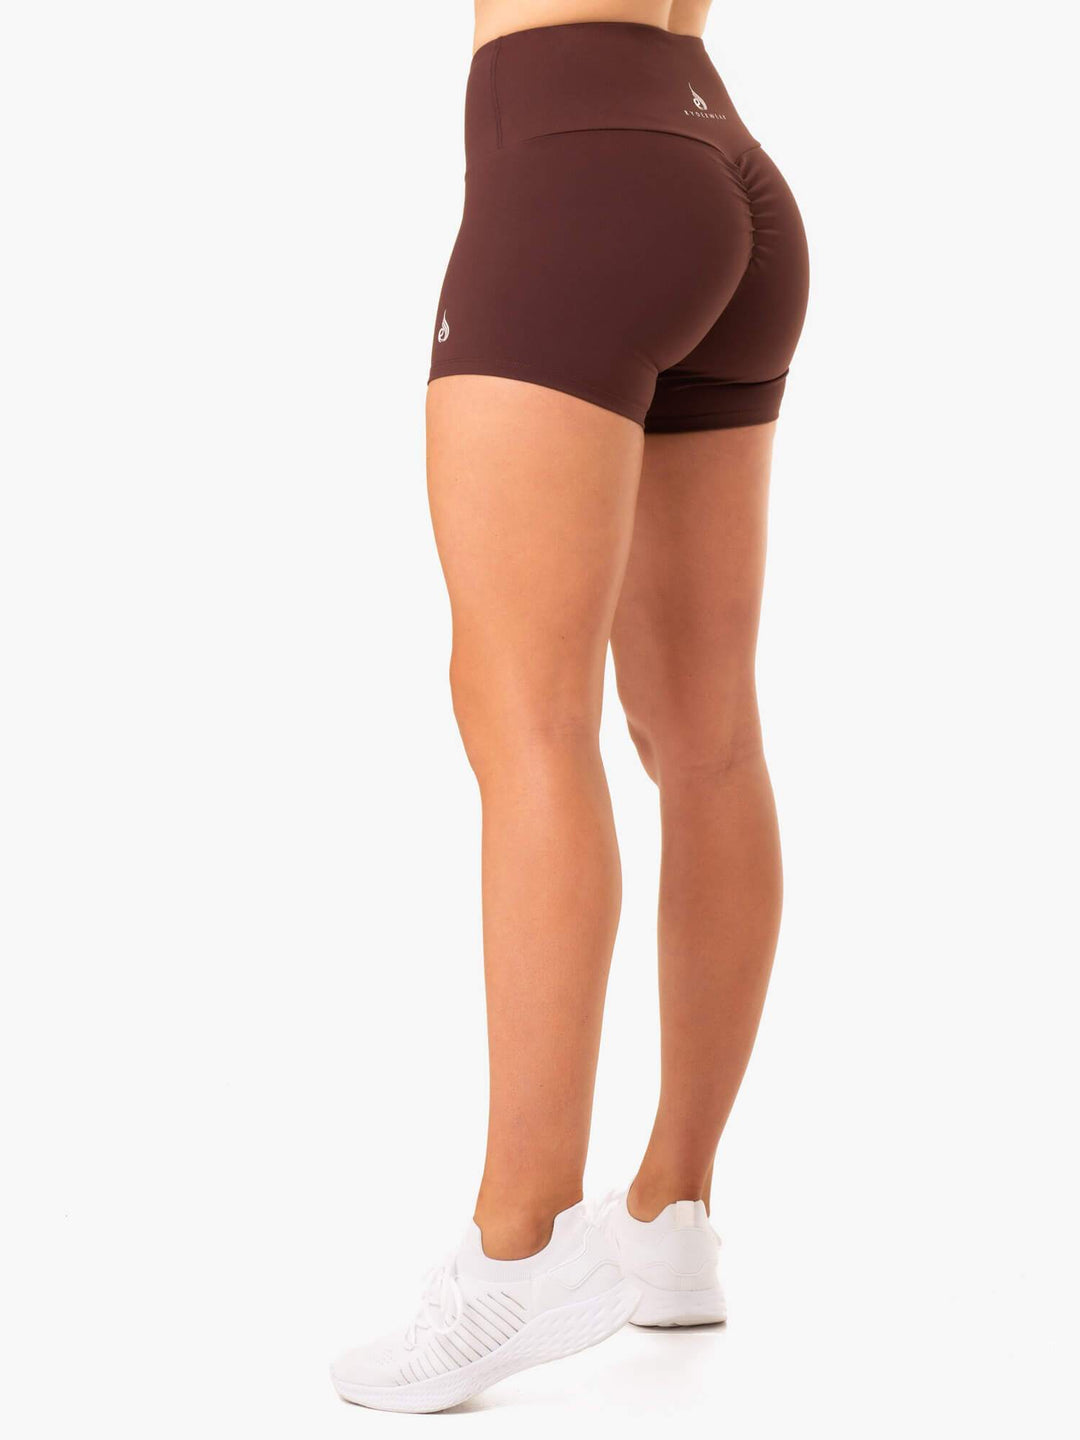 Staples Scrunch Bum Booty Shorts - Chocolate Clothing Ryderwear 